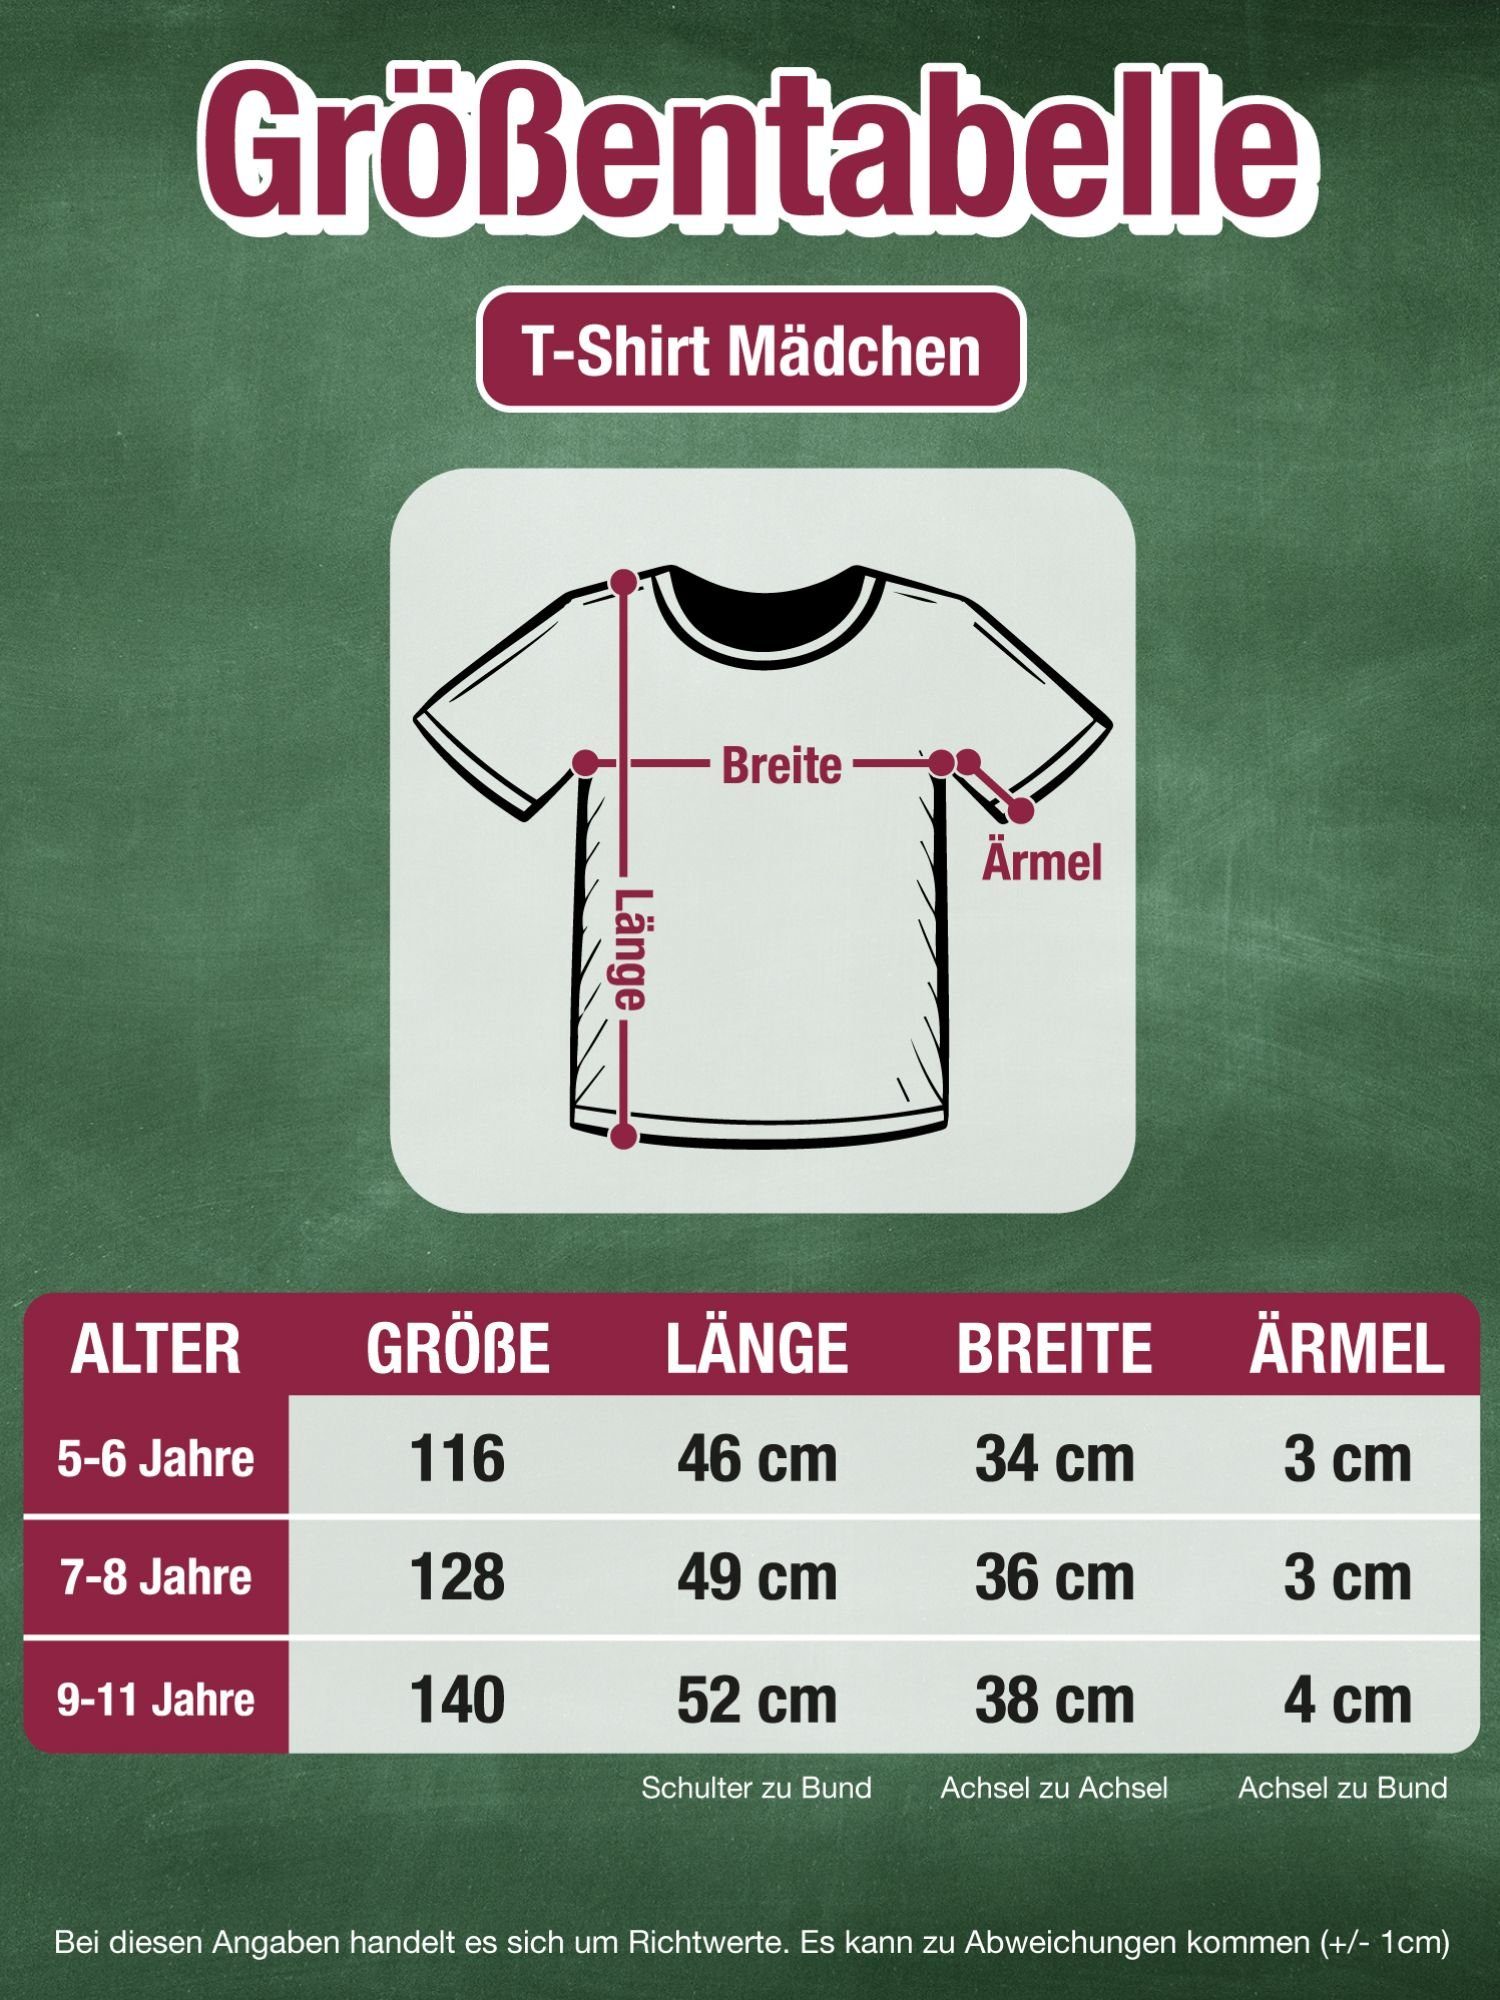 Einhorn Fuchsia Mädchen Schulkind T-Shirt 2023 Shirtracer 1 Einschulung